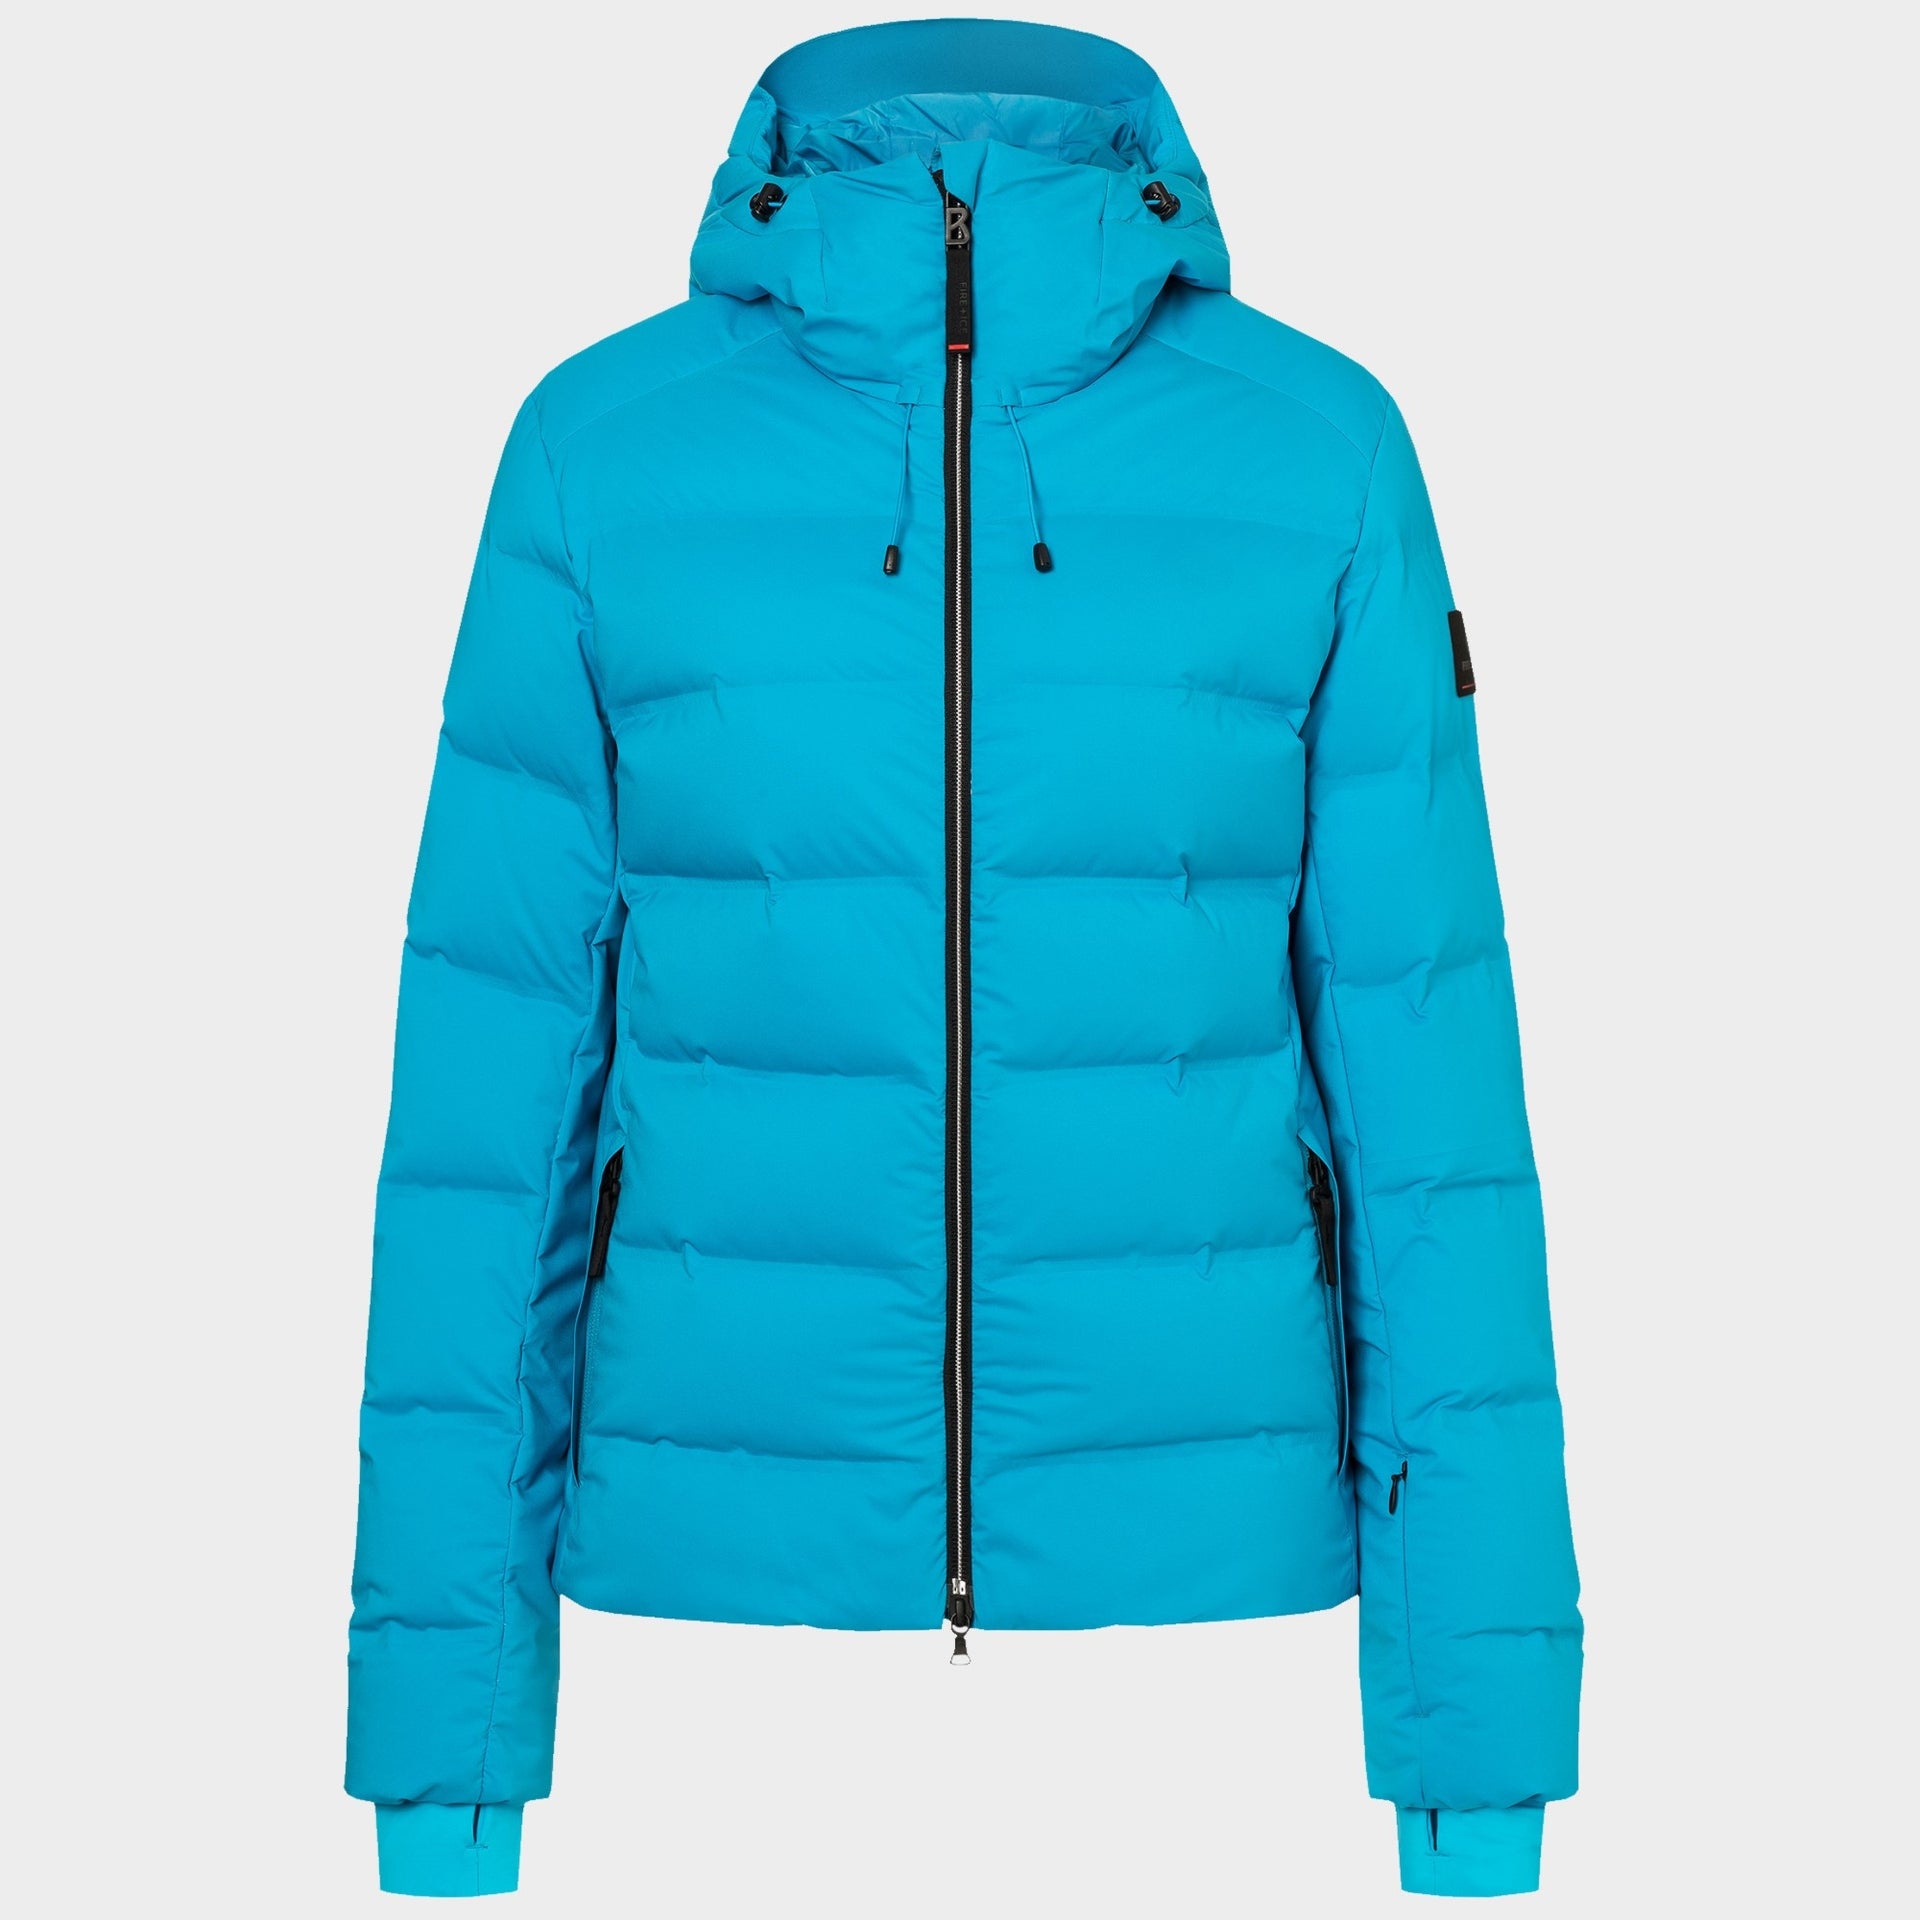 Giana women's ski jacket & Fur, Bogner